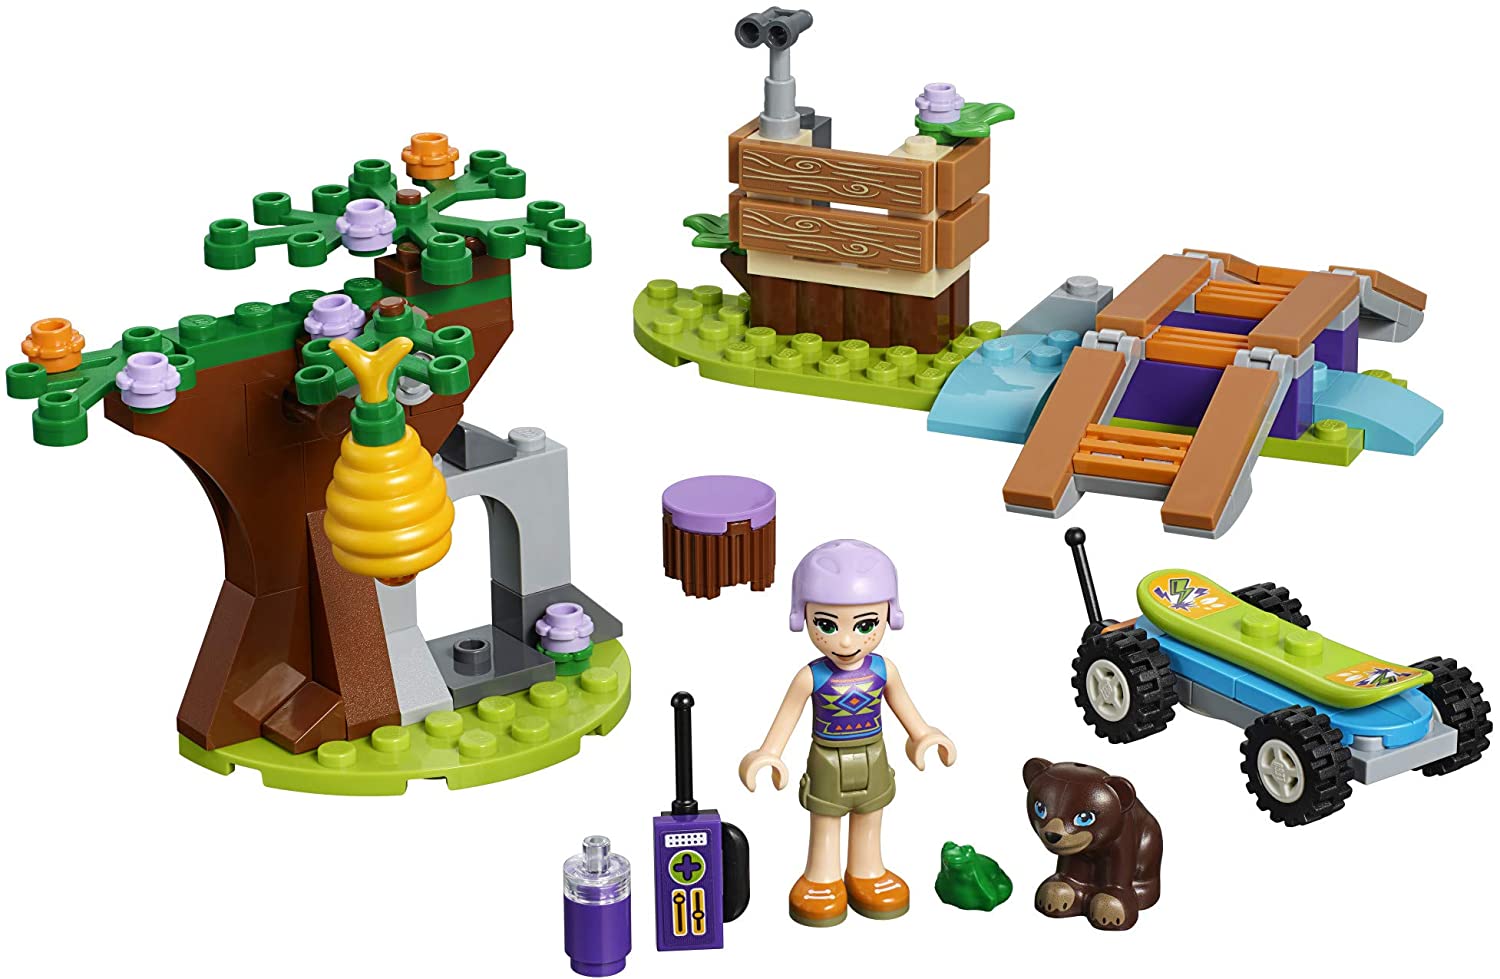 LEGO Aged 6 Plus Friends Mias Forest Adventure Toy Of 134 Piece Sets